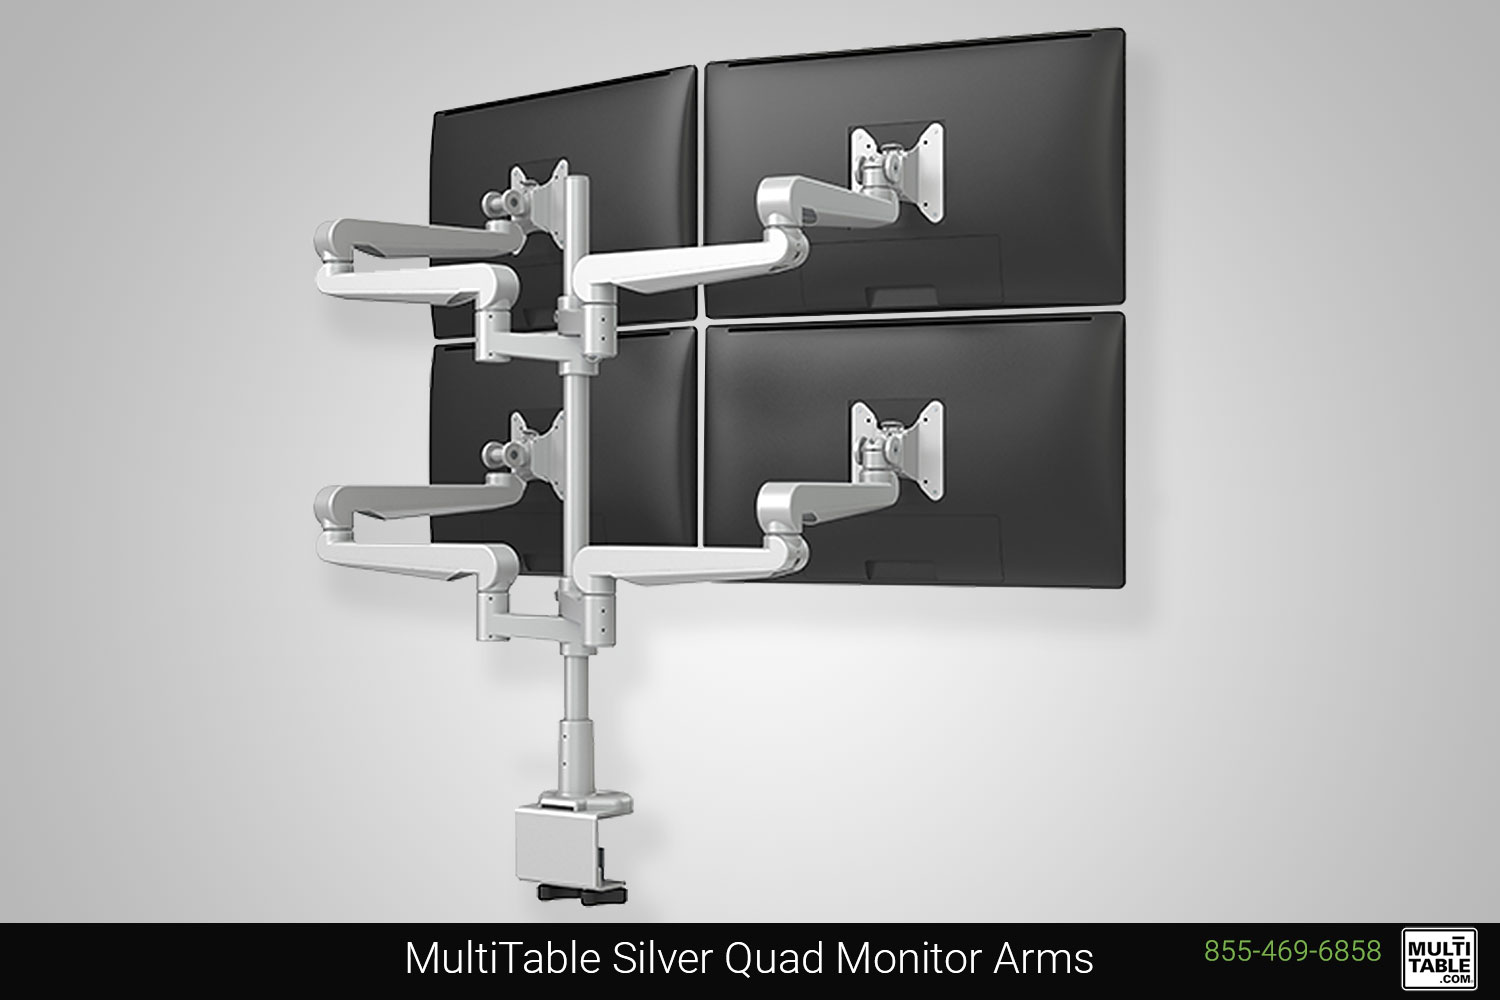 Custom Standing Desk Silver Quad Monitor Arms Ergonomic Accessories MultiTable Office Furniture Manufacturing Phoenix Arizona Since 2010